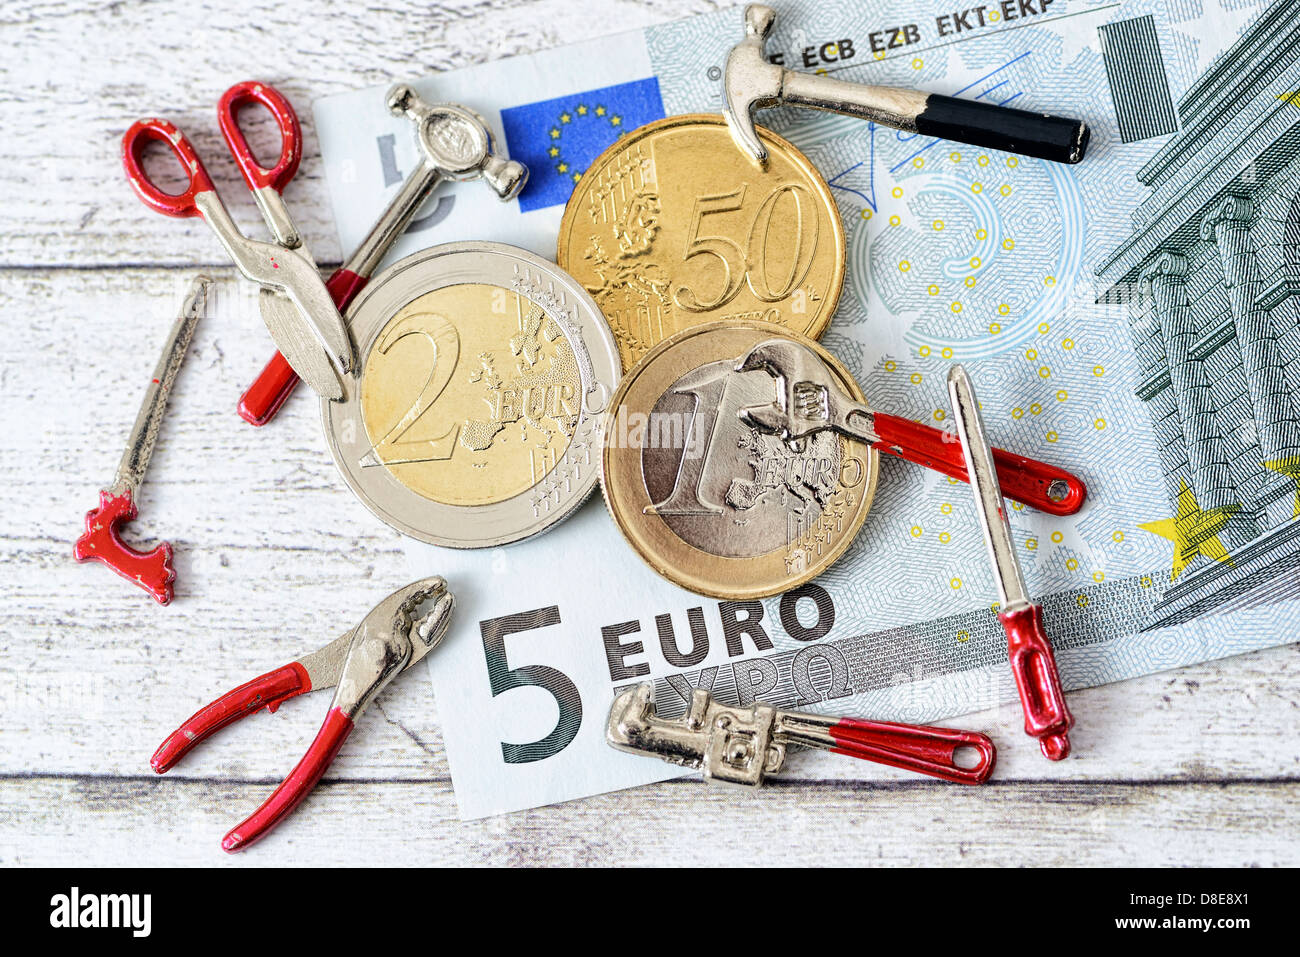 Euro coins with tools Symbolfoto 8,50 EUR minimum wage Stock Photo